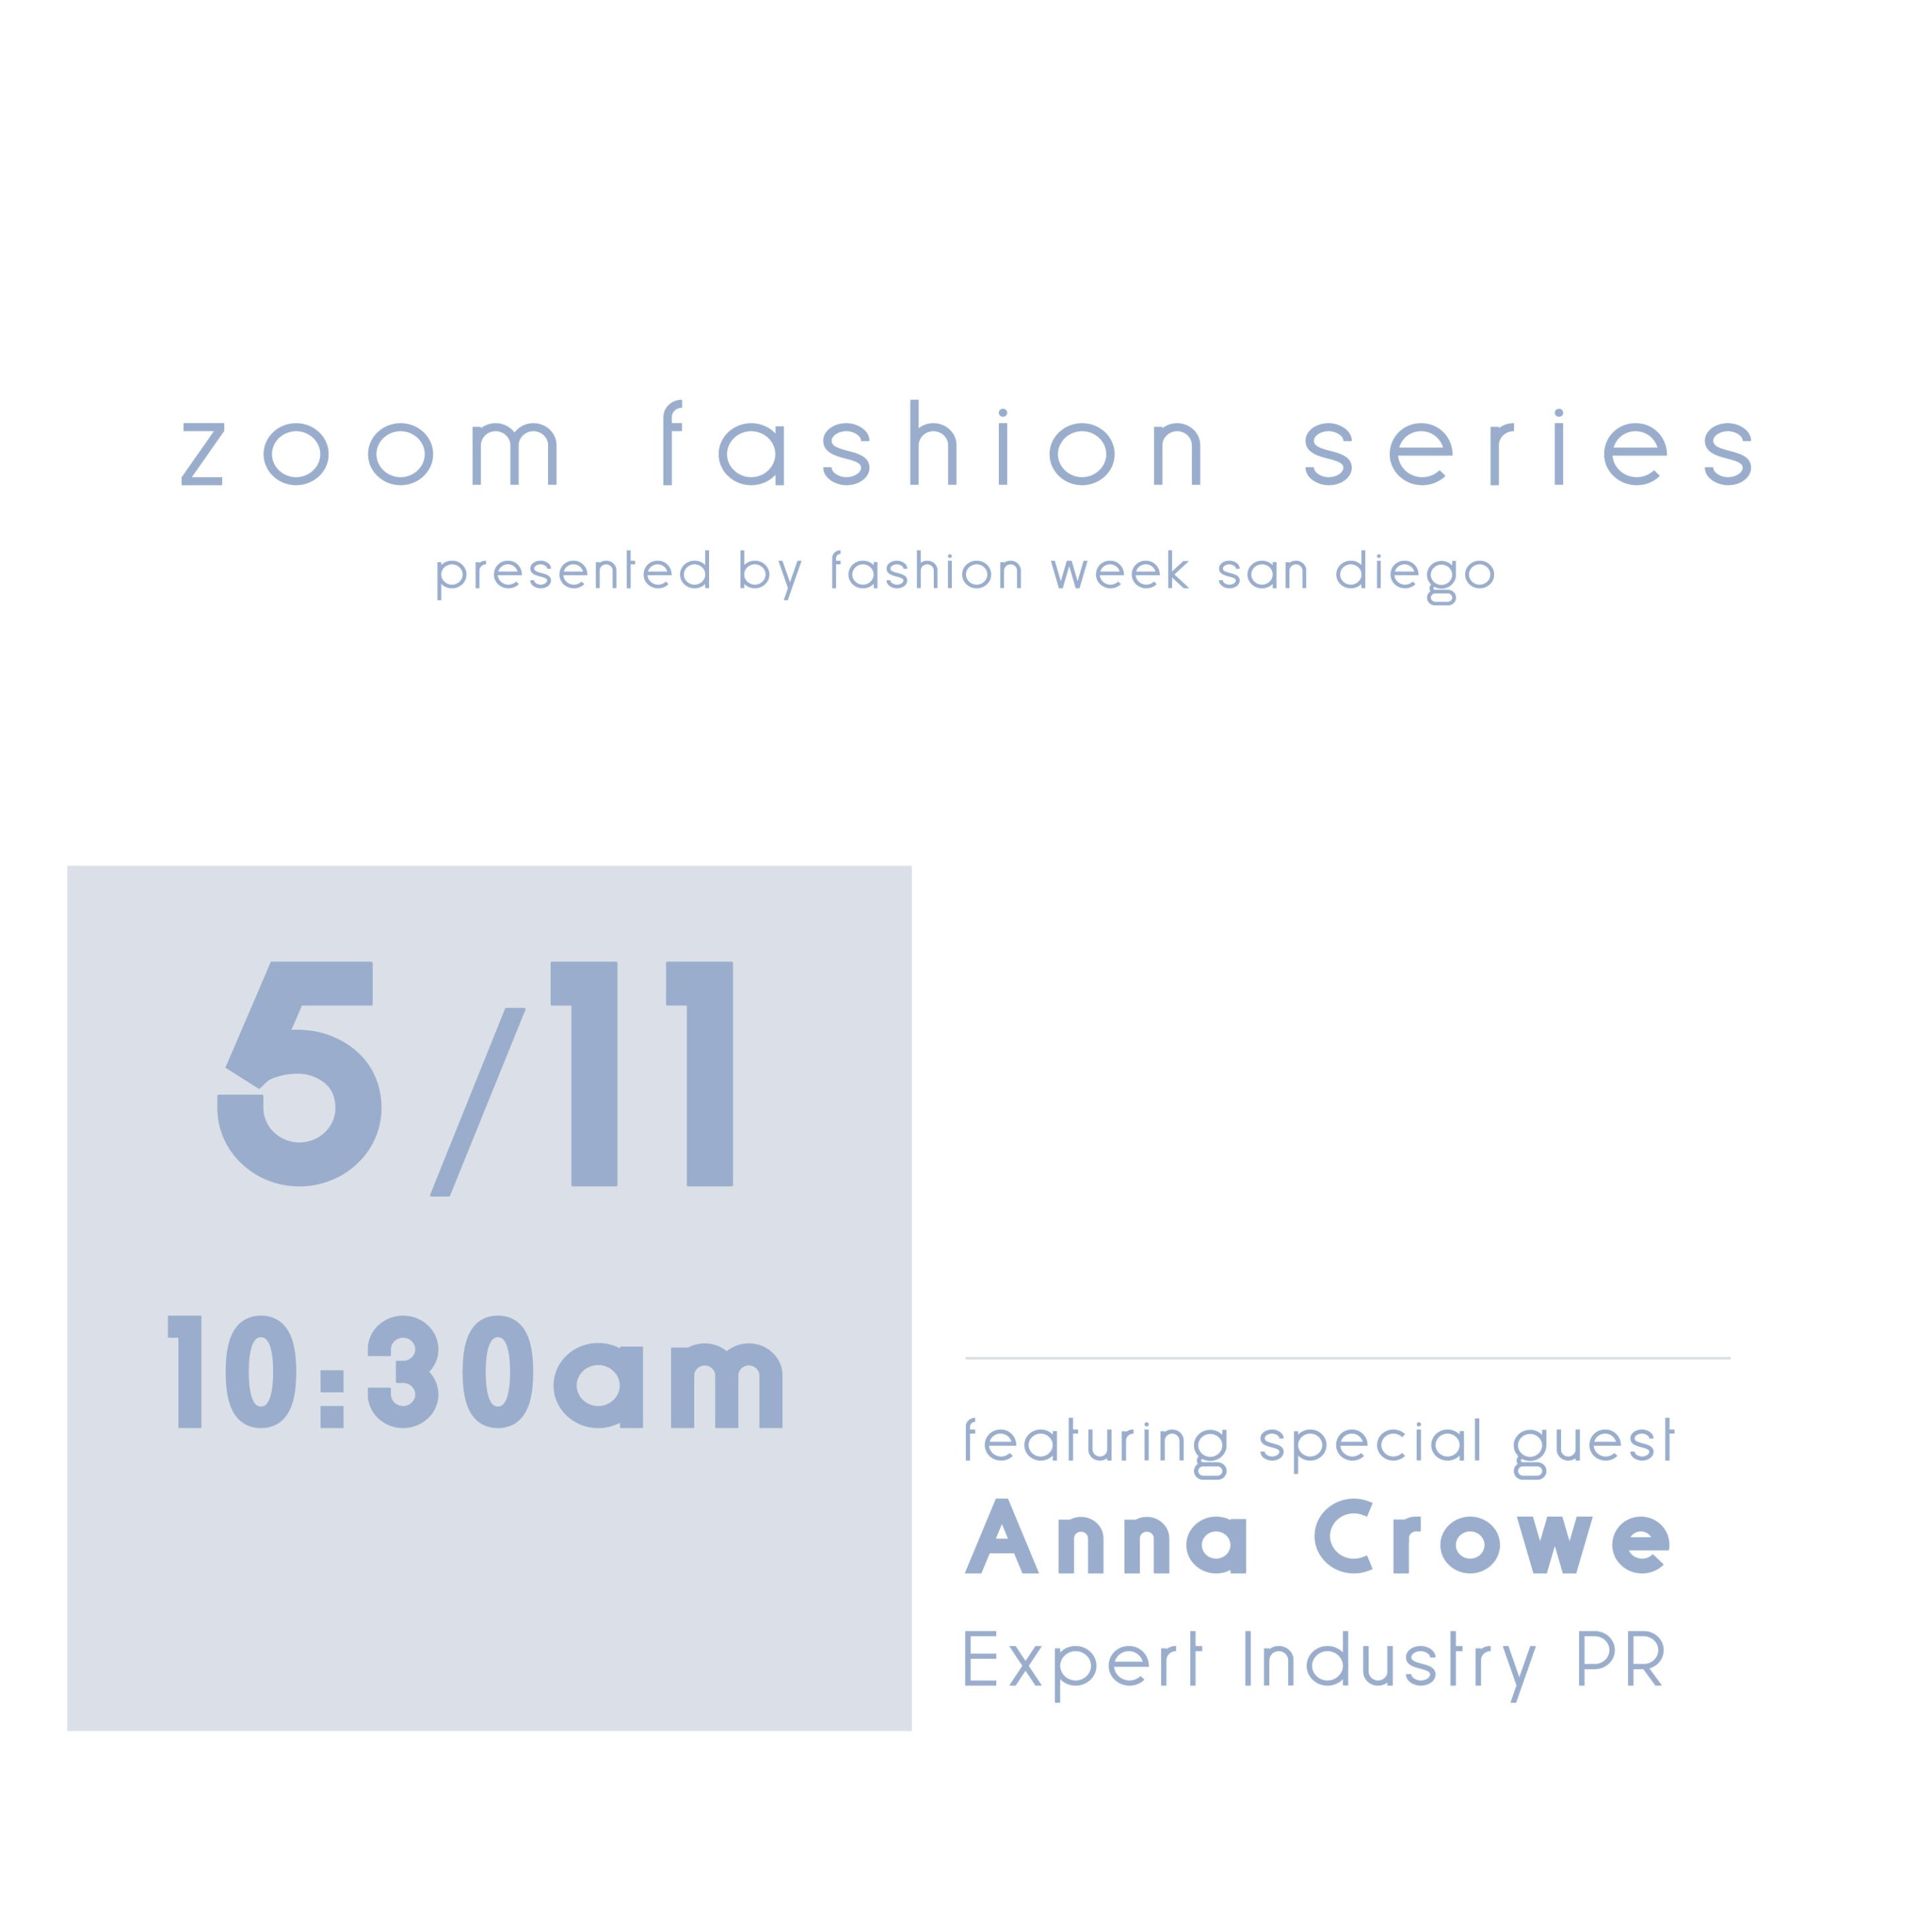 Zoom Fashion Series with Anna Crowe